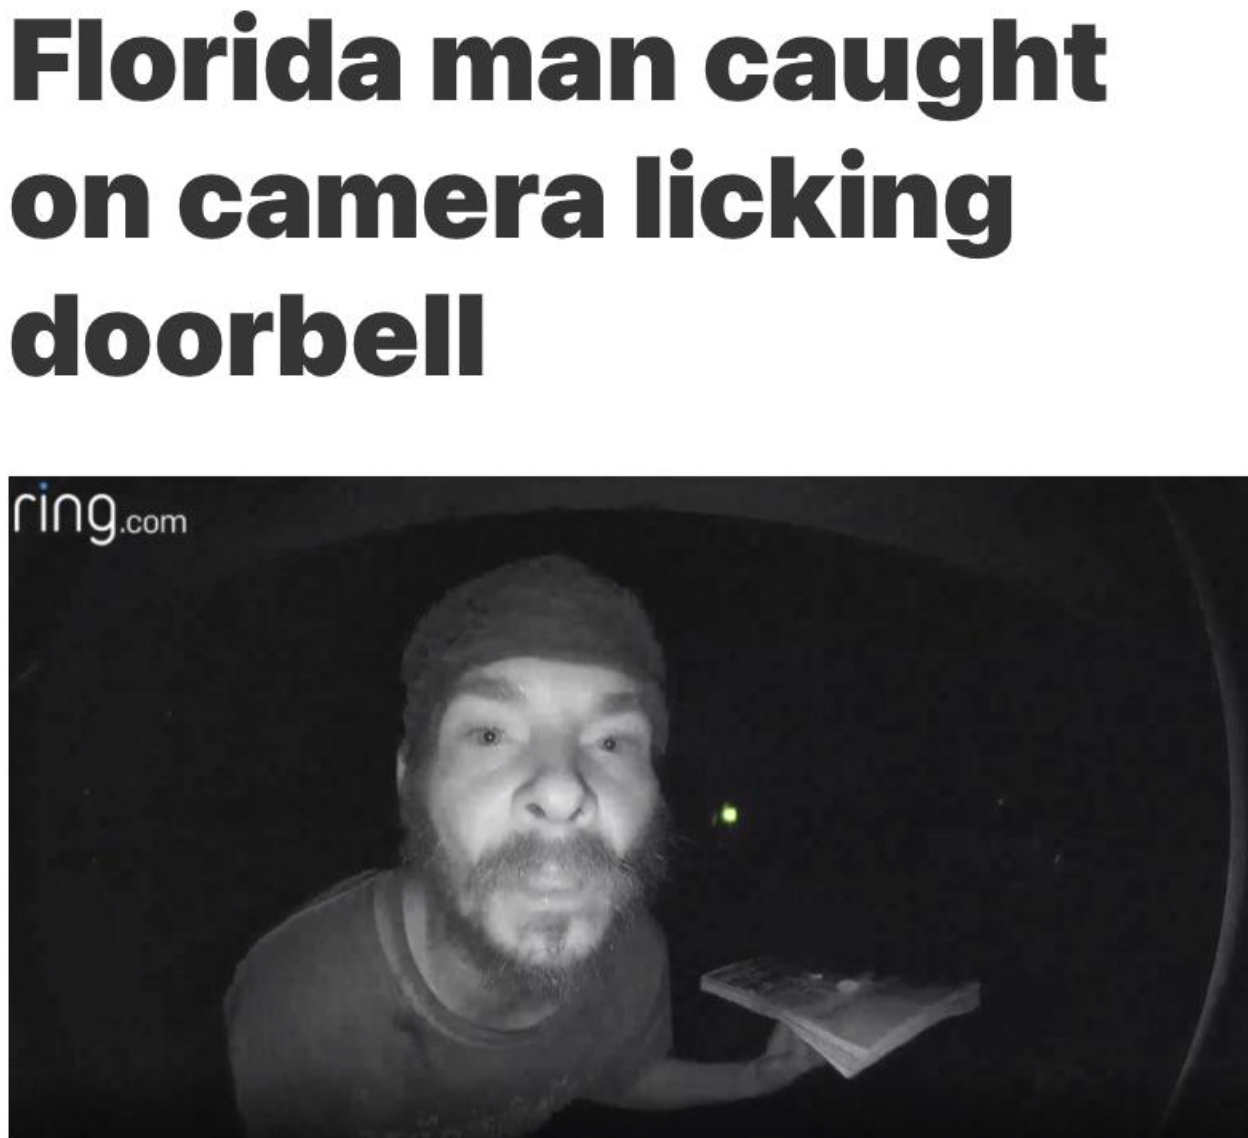 photo caption - Florida man caught on camera licking doorbell ring.com